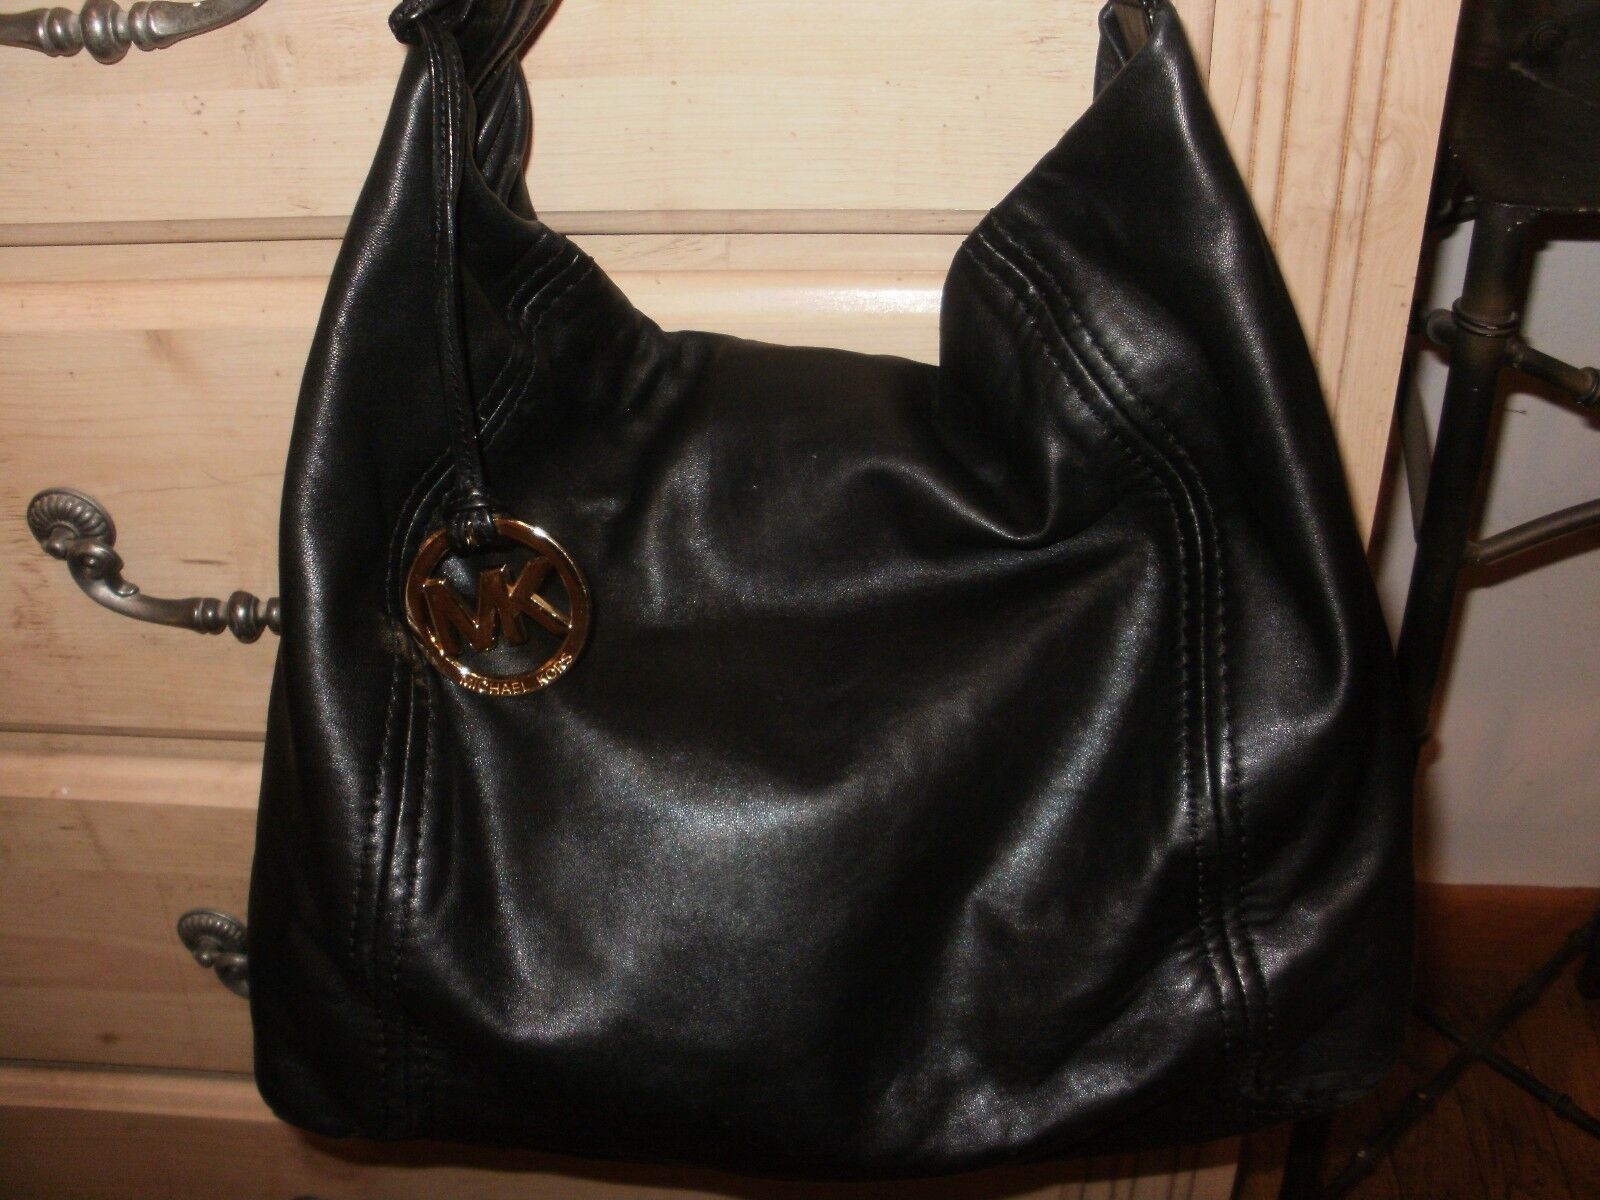 Michael Kors Black, Soft Leather Handbag with Gold Trim | eBay